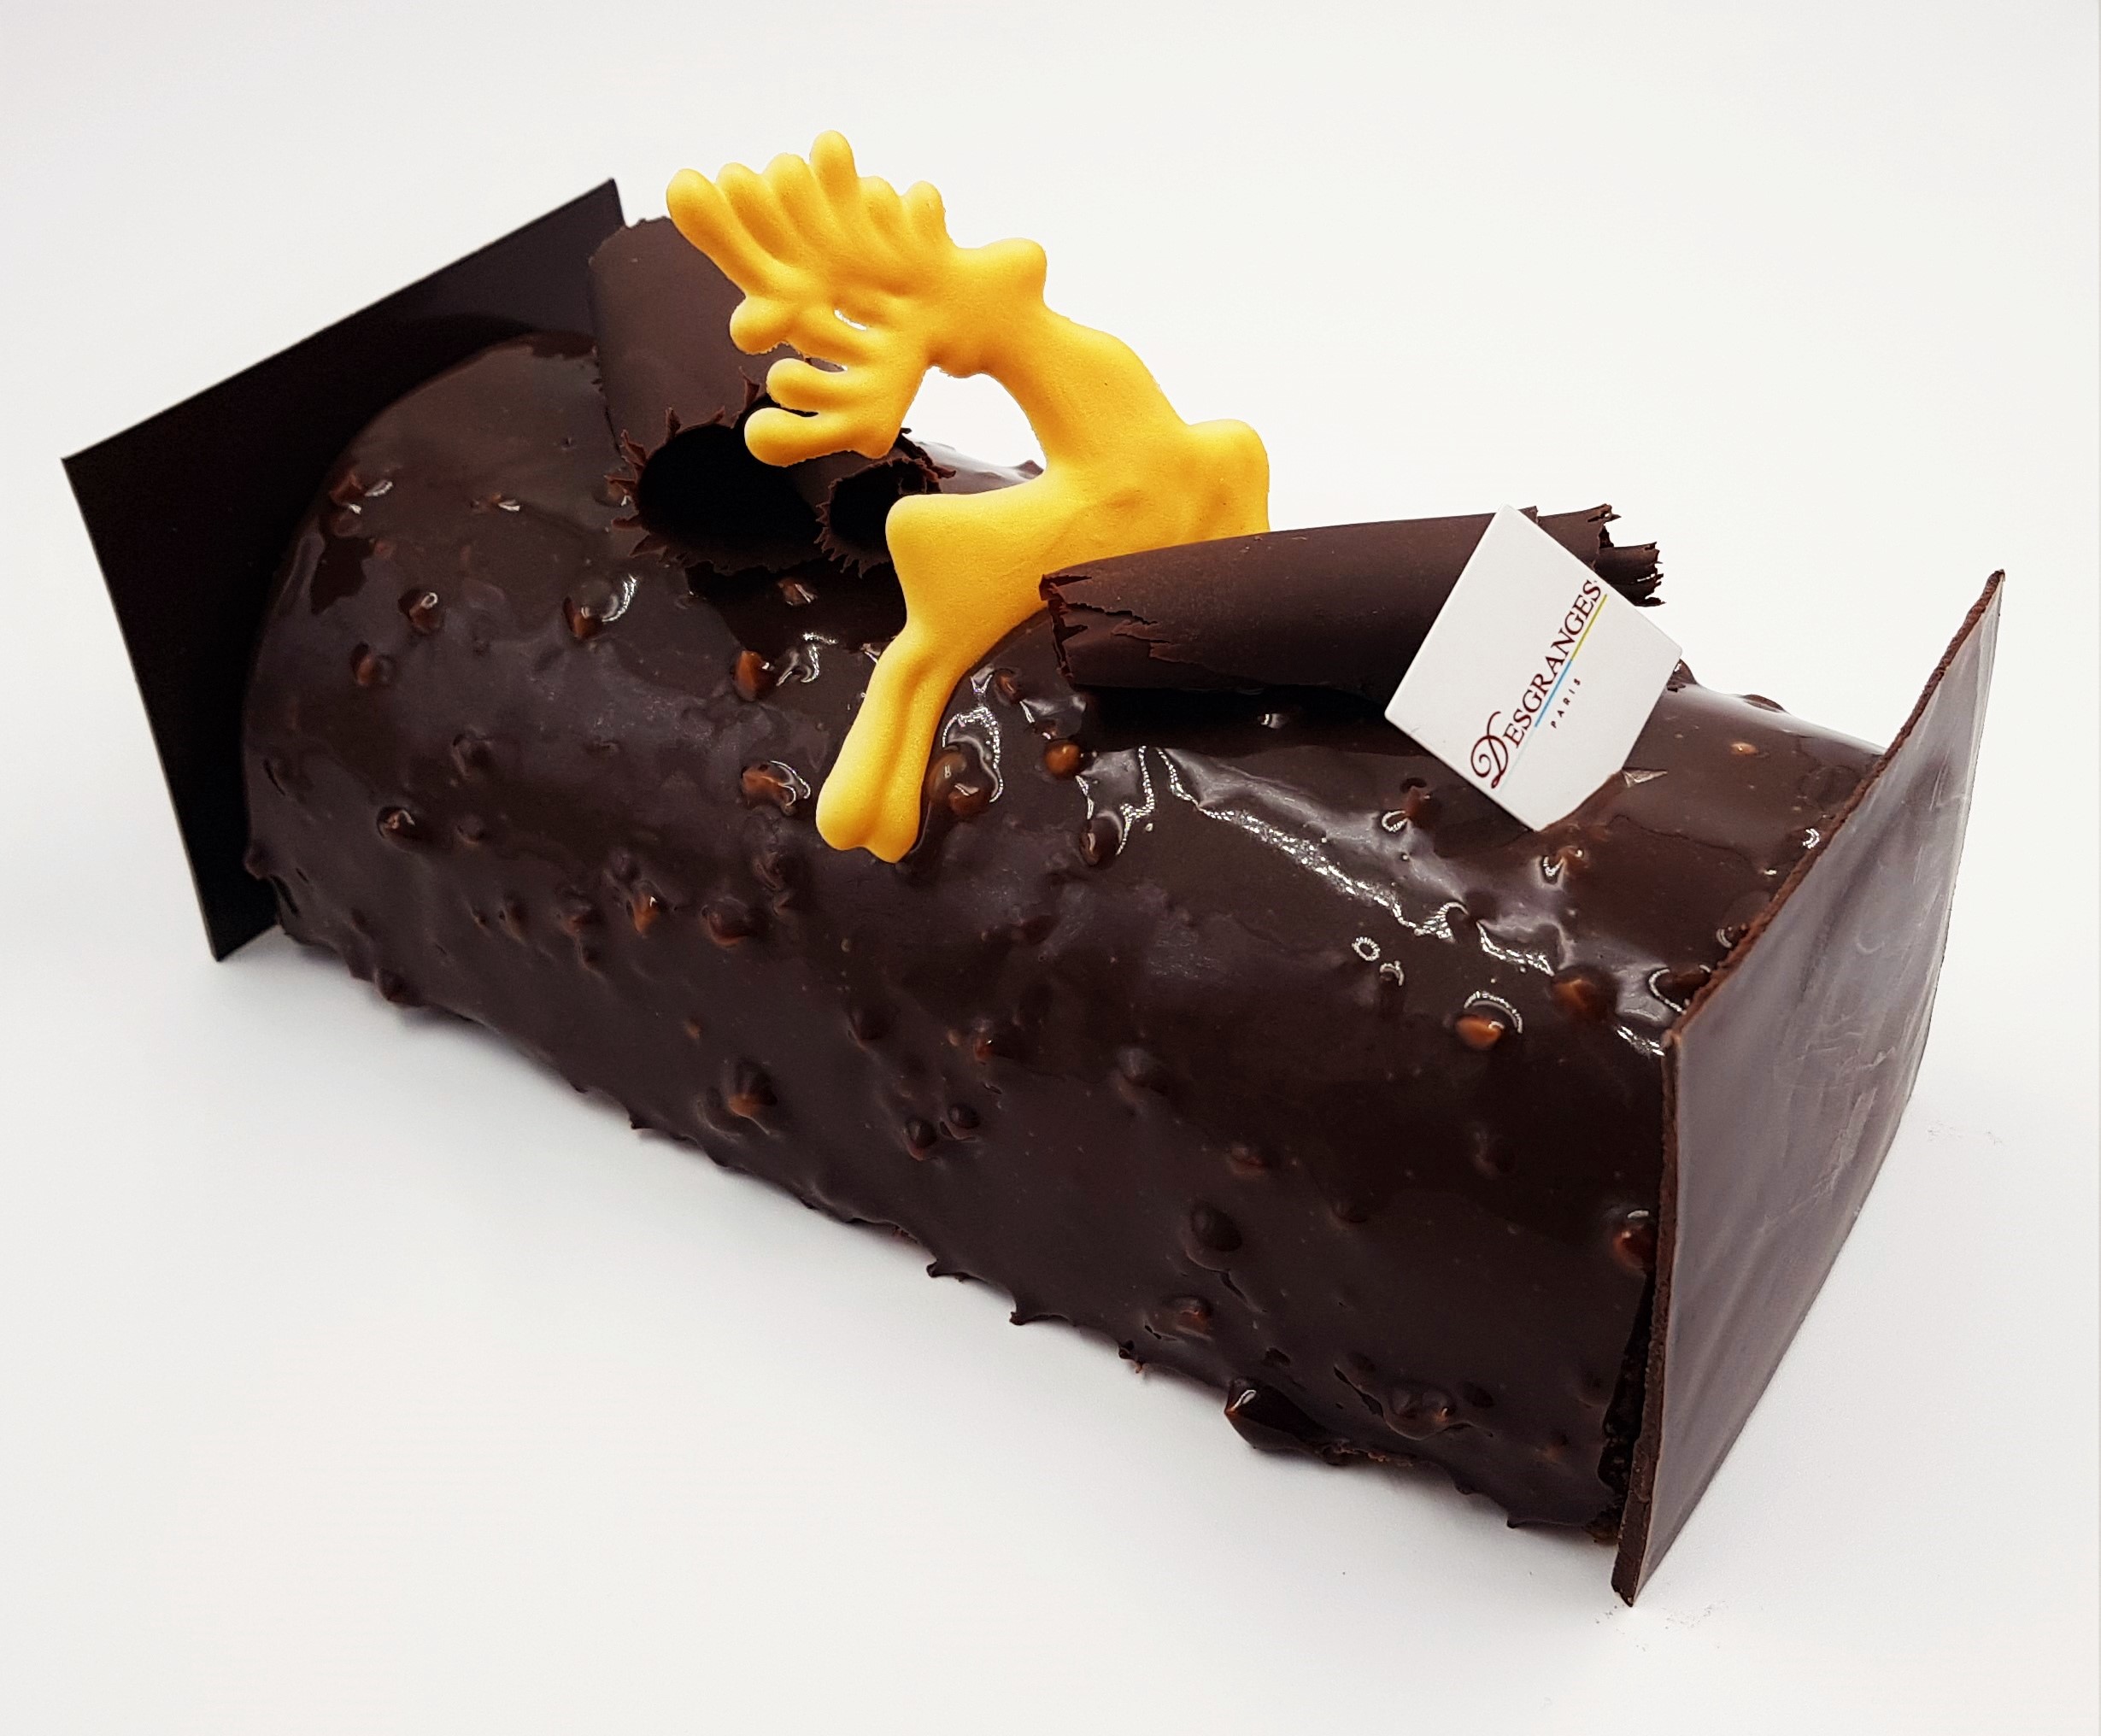 Bûche Royal Chocolat - Dodofairy